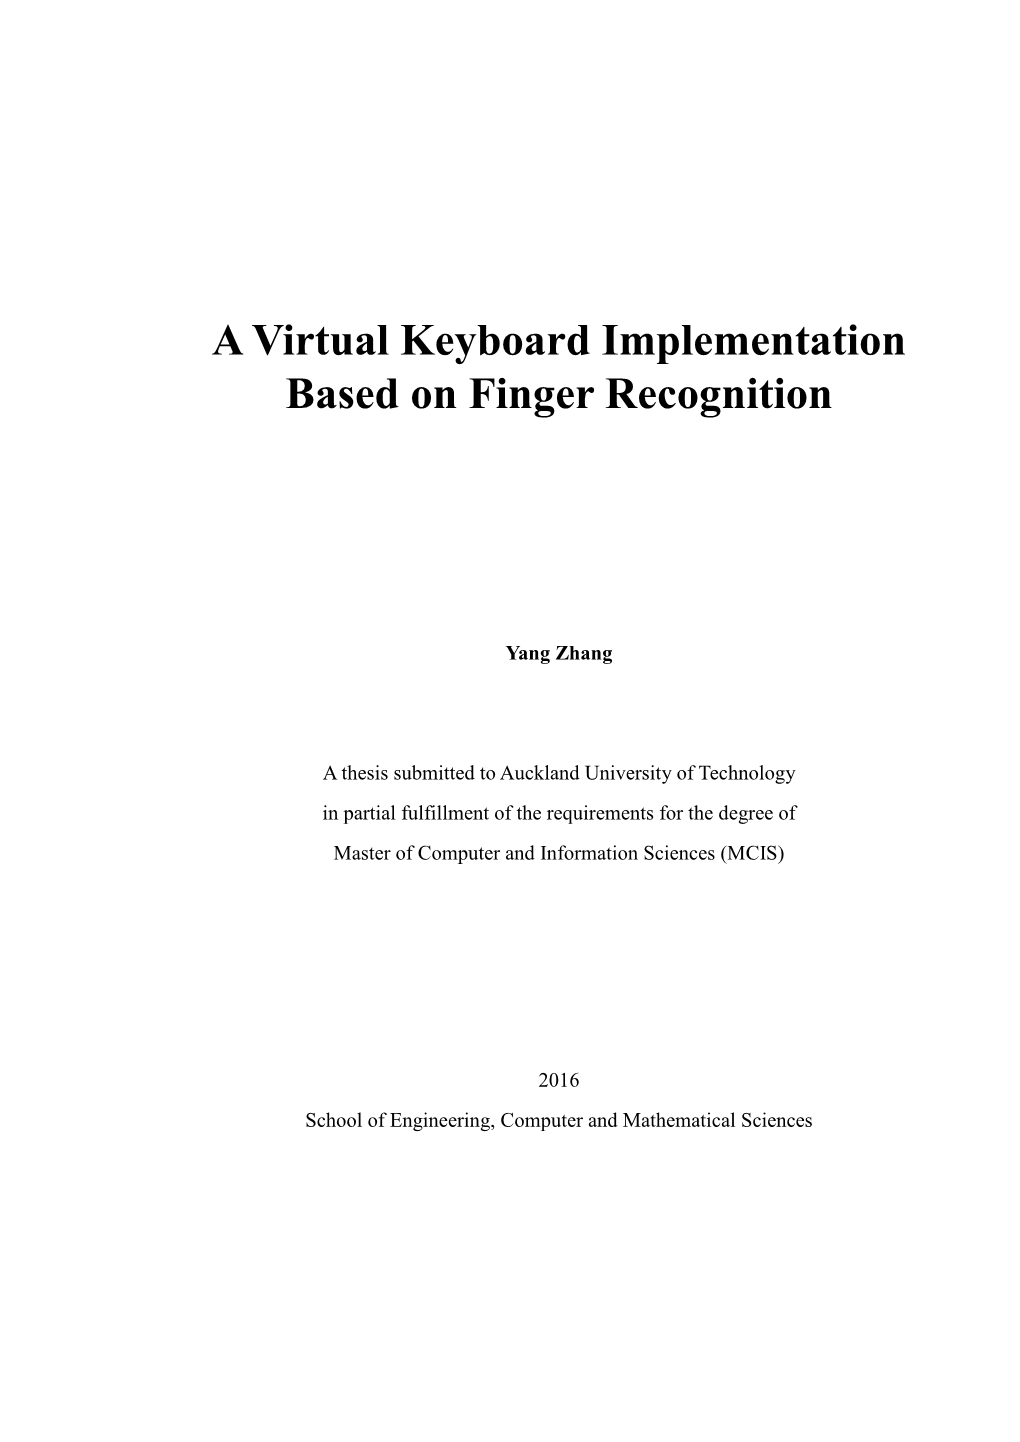 Virtual Keyboard Based on Single Finger Recognition